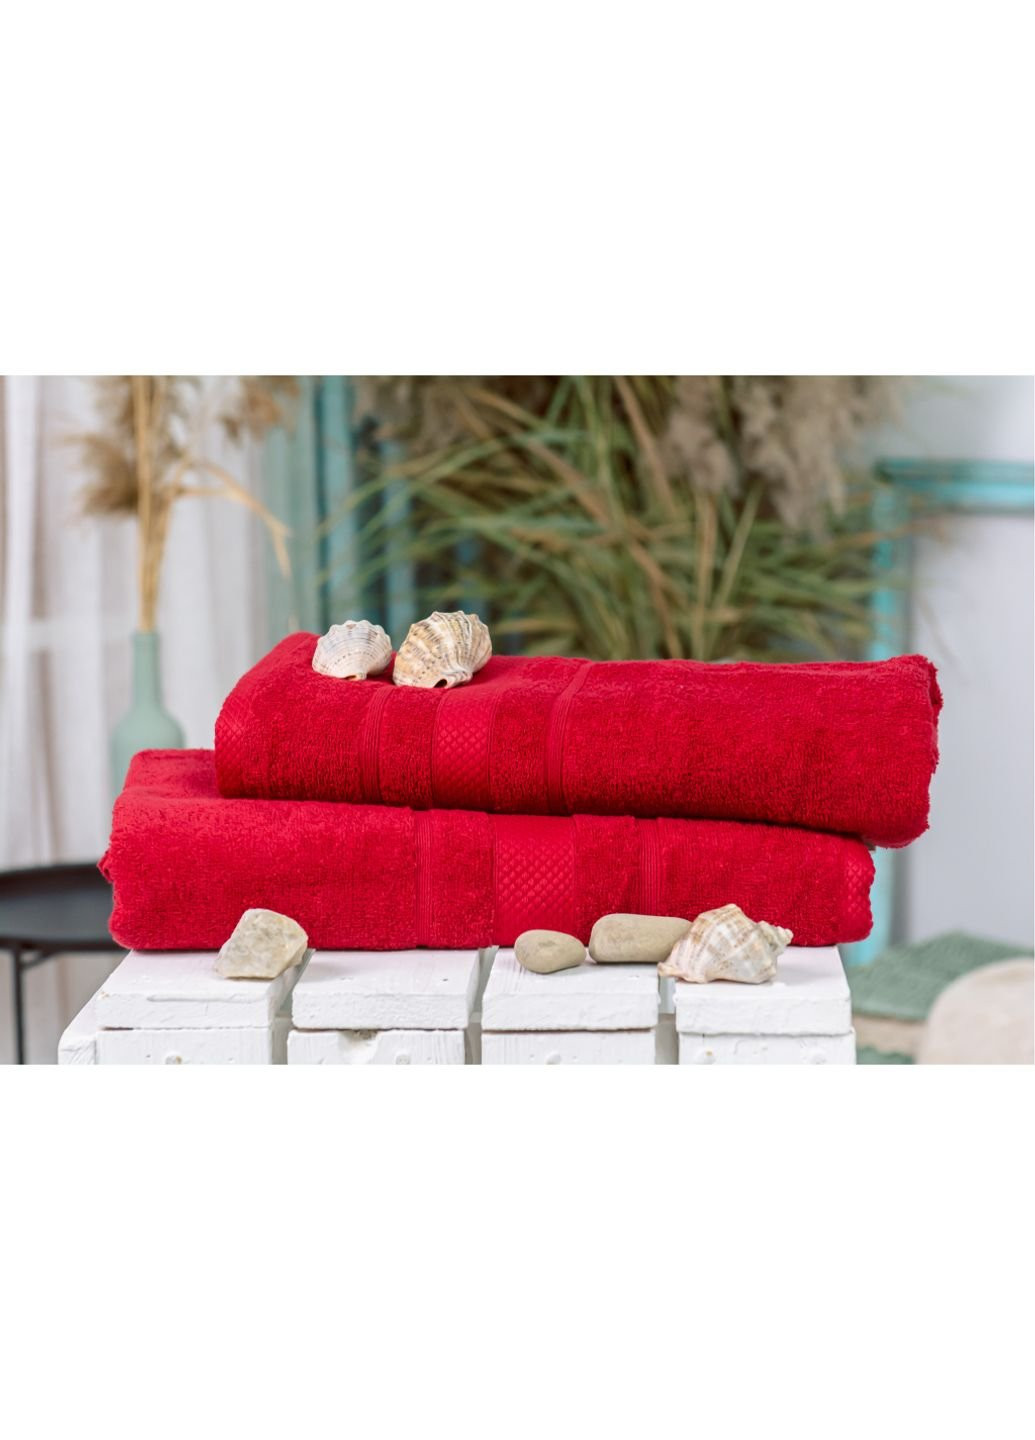 Mirson полотенце набор банный №5070 elite softness bordo 50х90, 70х140 (2200003183085) красный производство - Украина